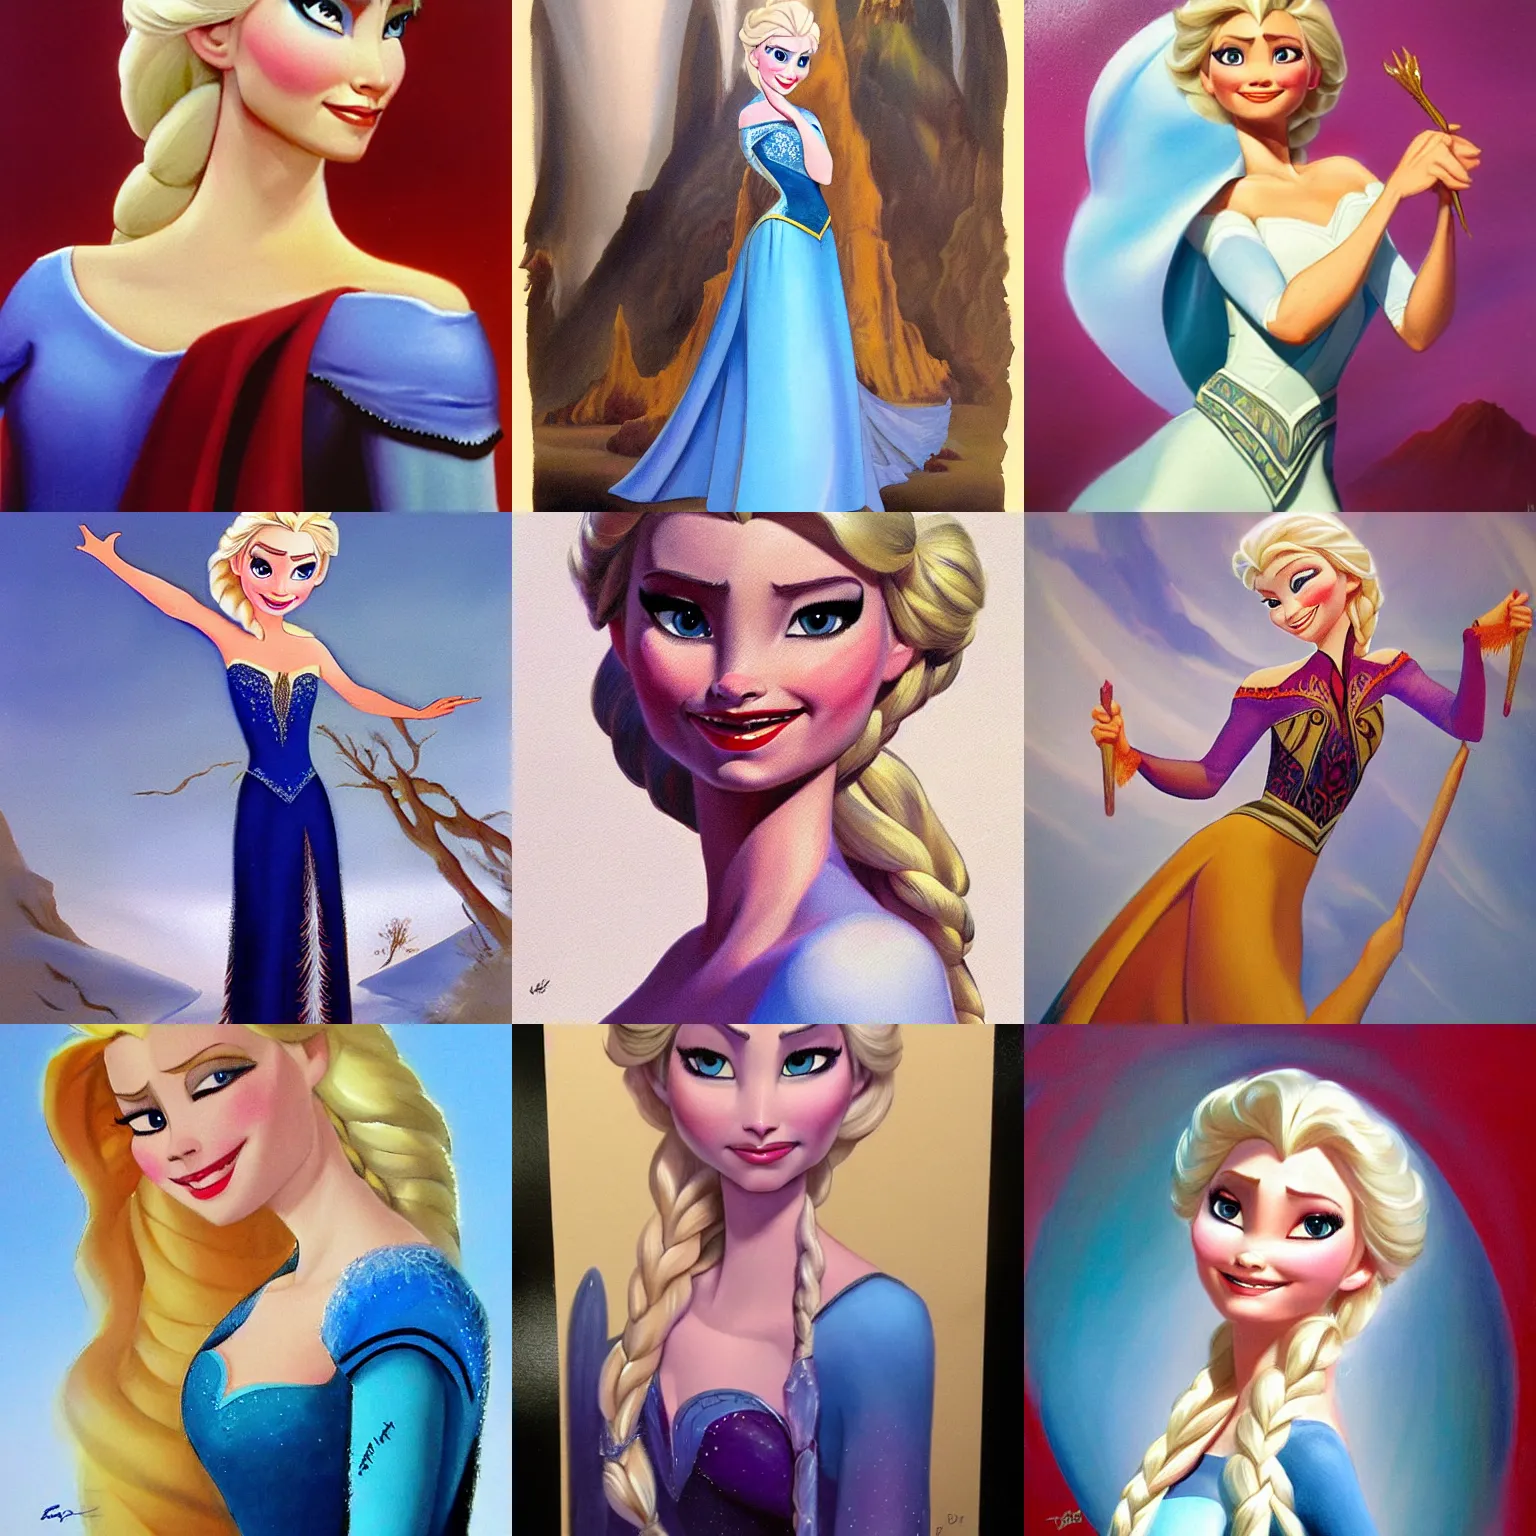 Prompt: Elsa from Frozen painted by Boris Vallejo